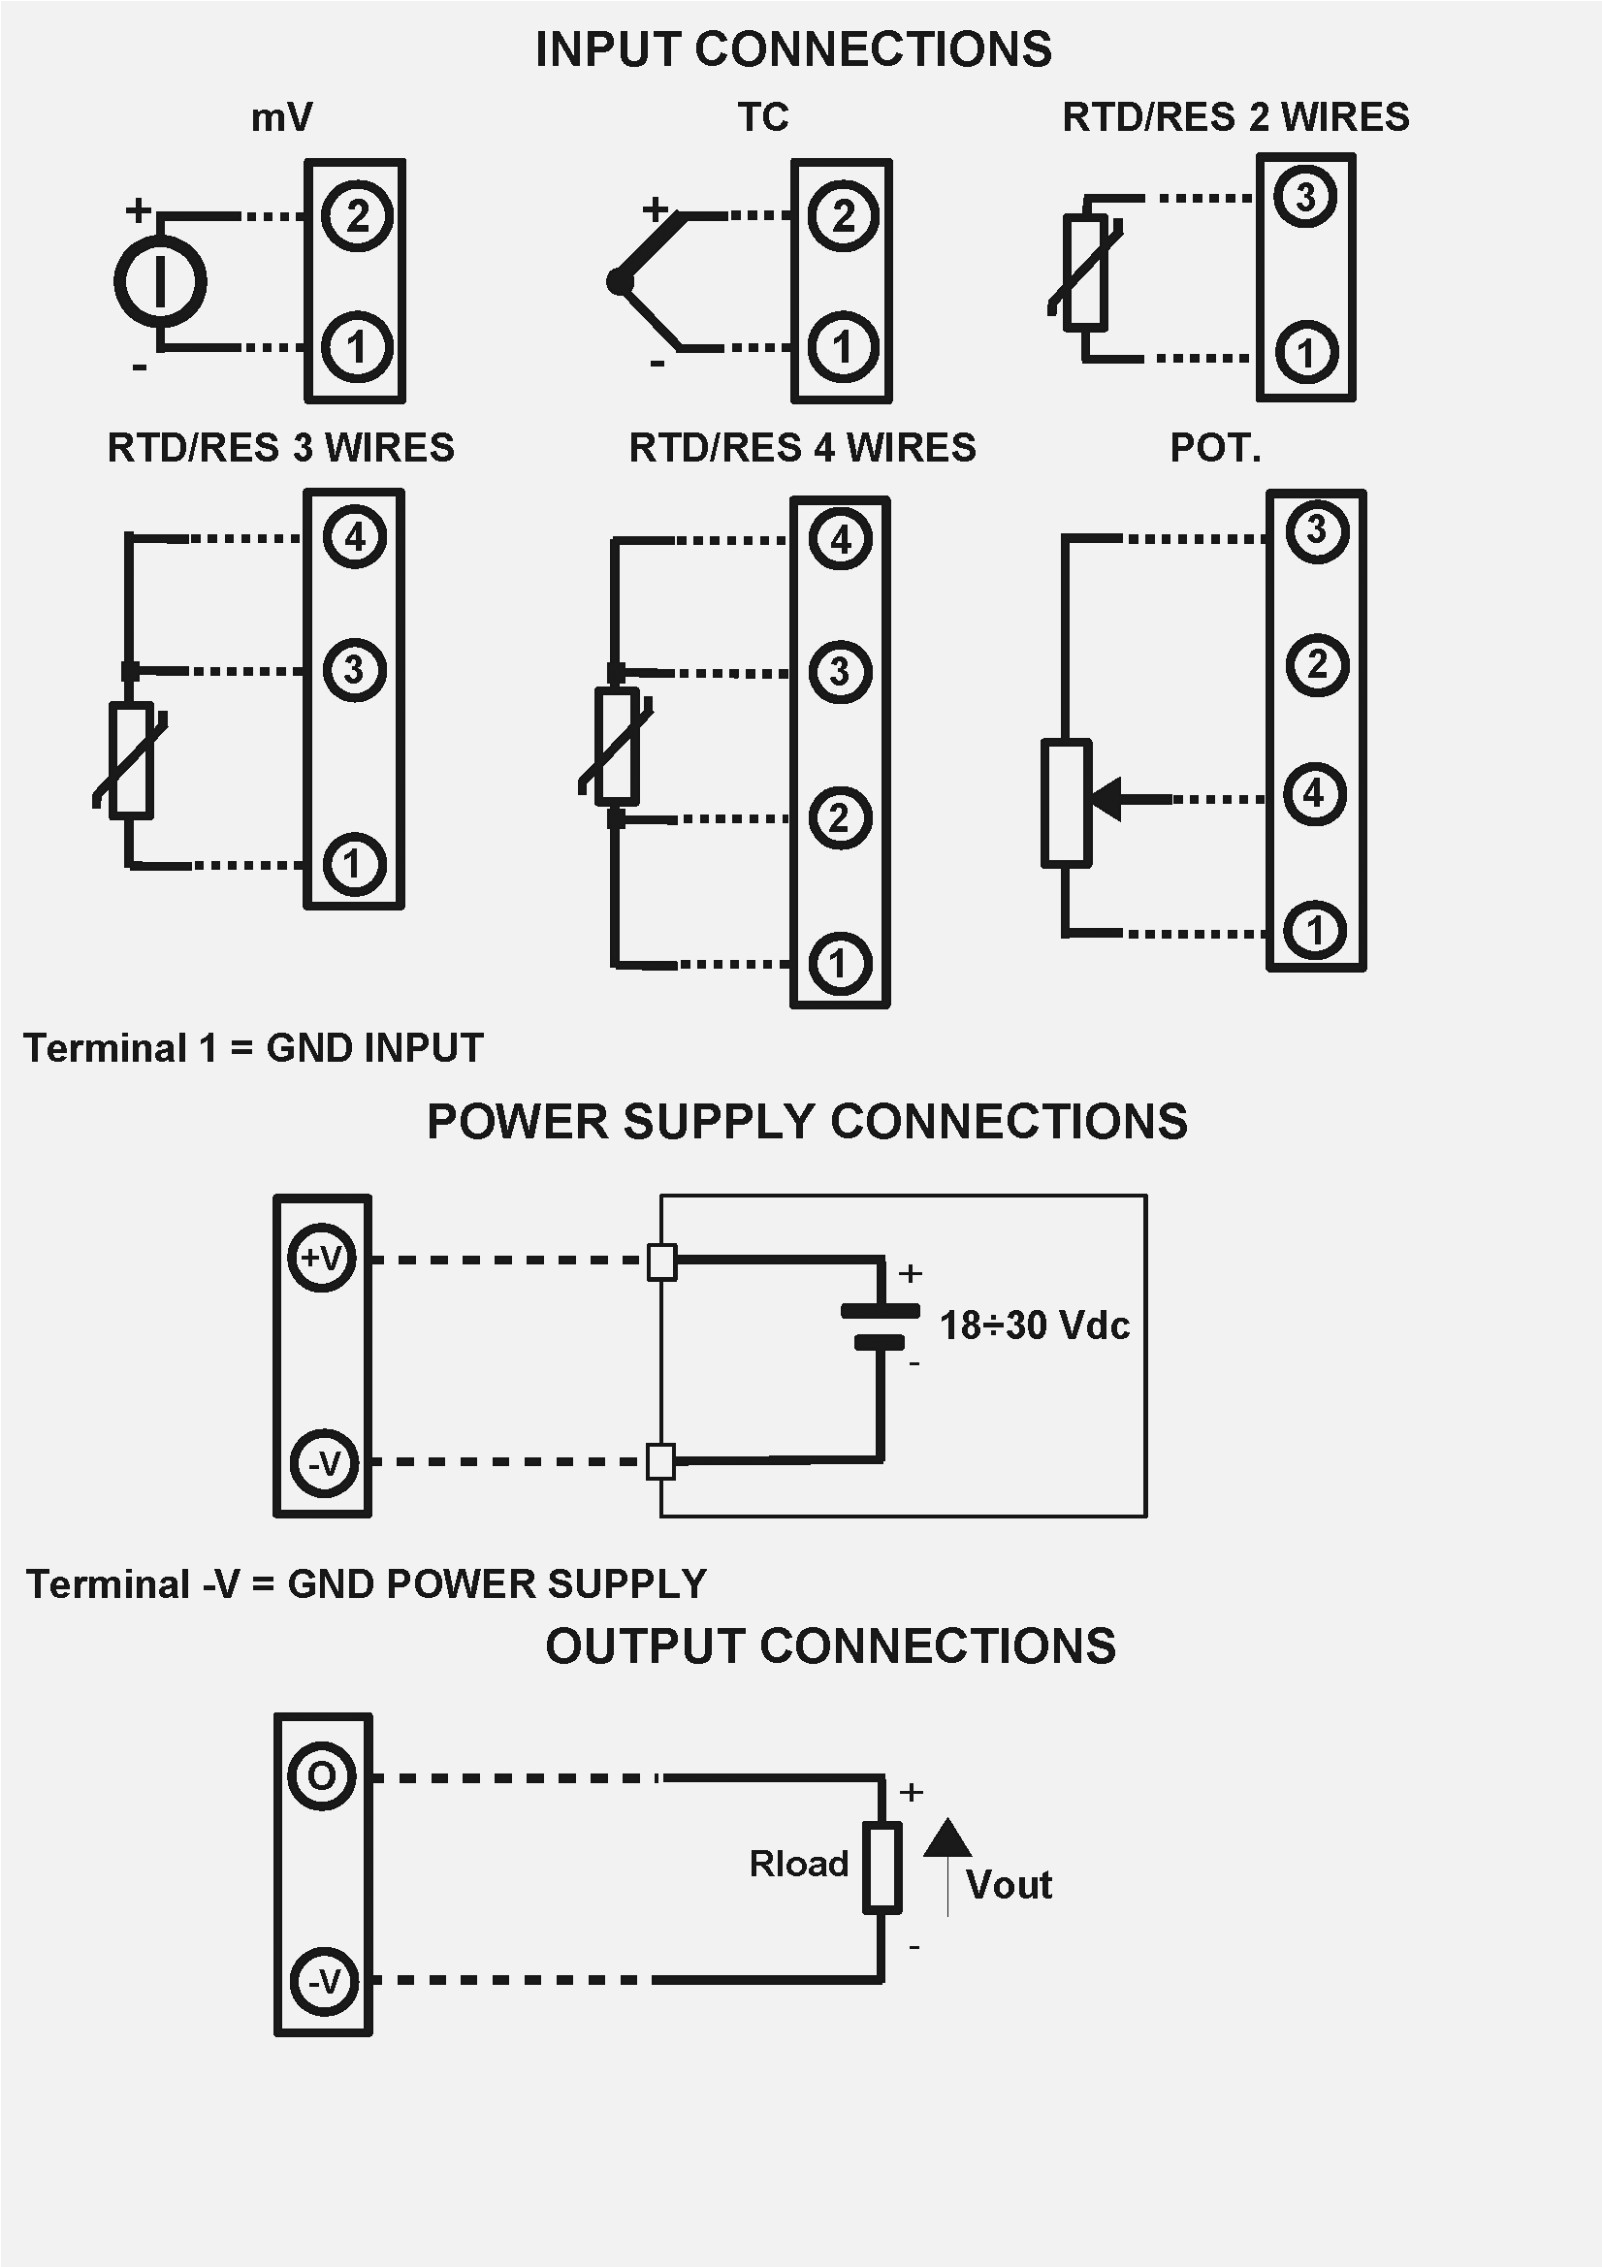 6 wire rtd diagram wiring diagram sample 6 wire thermocouple diagram